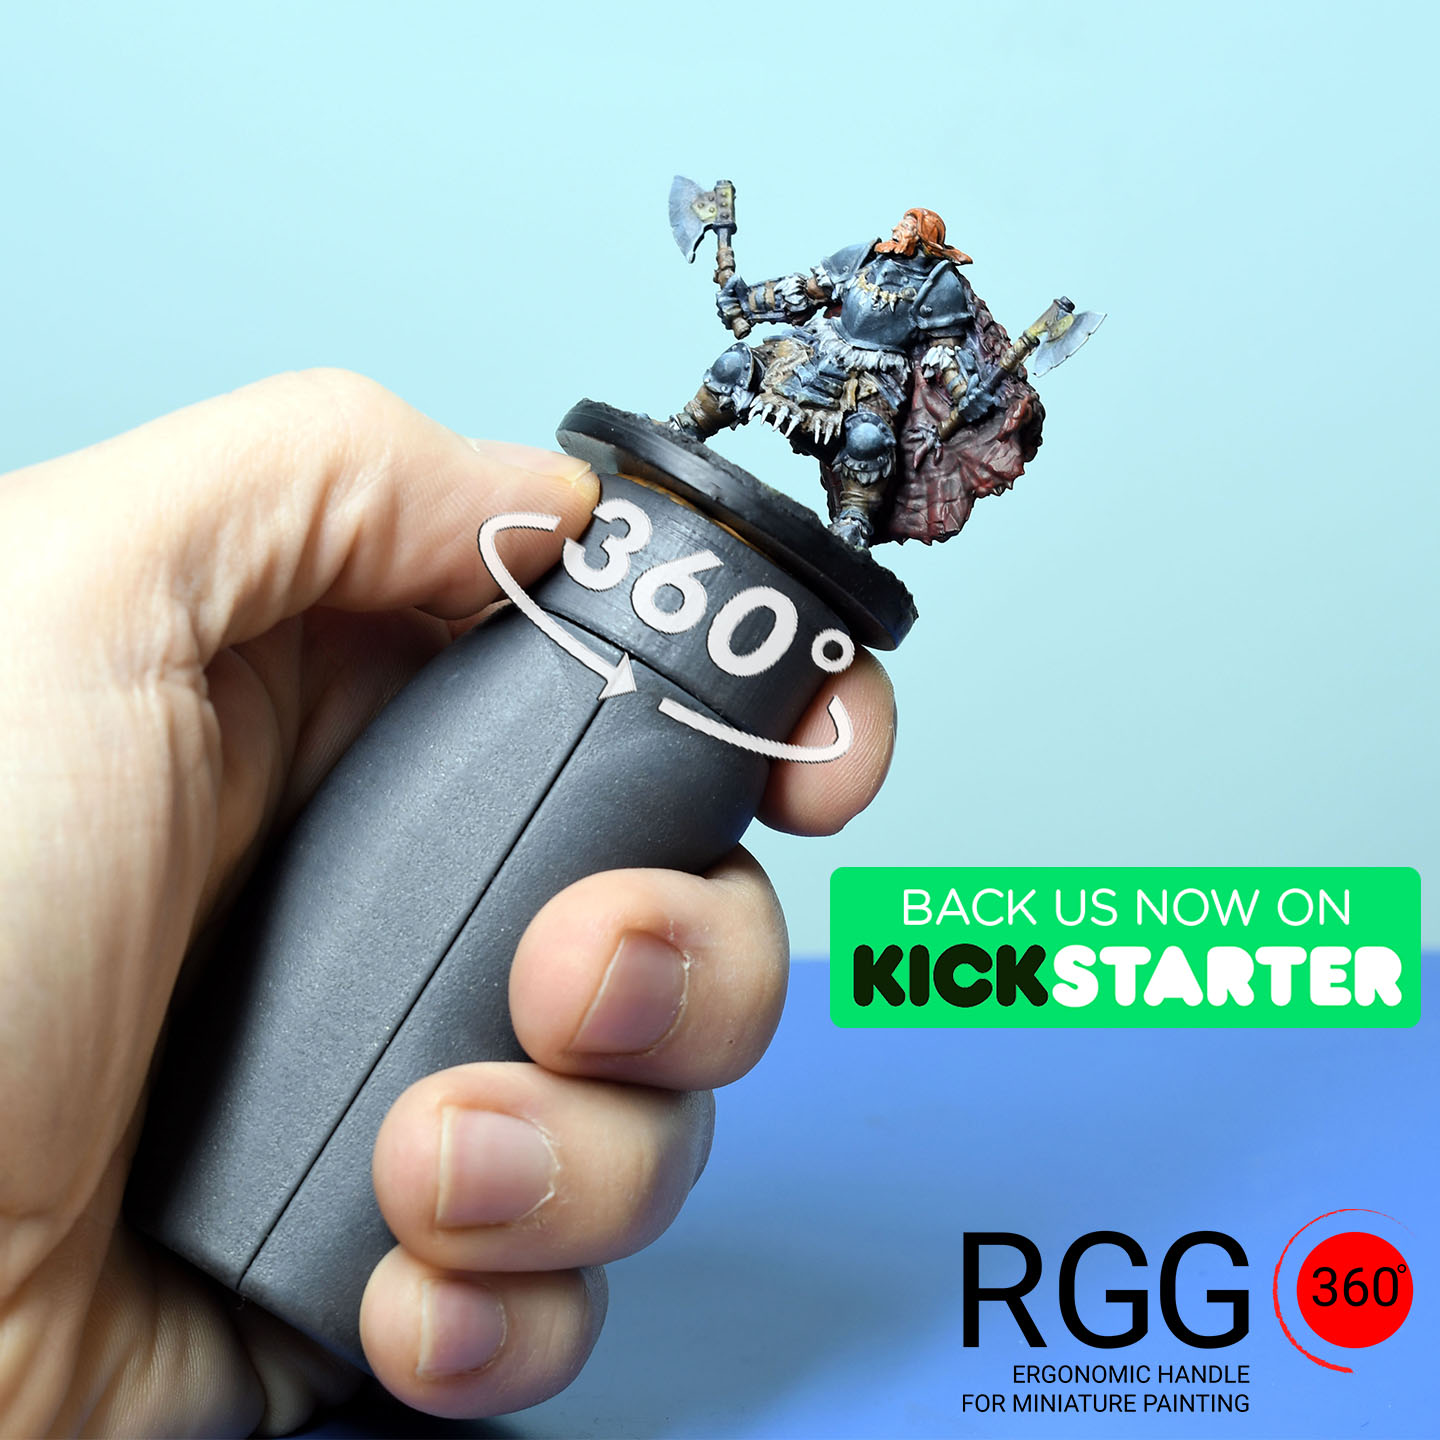 [KS] RGG 360° miniature handle: Cool offer!